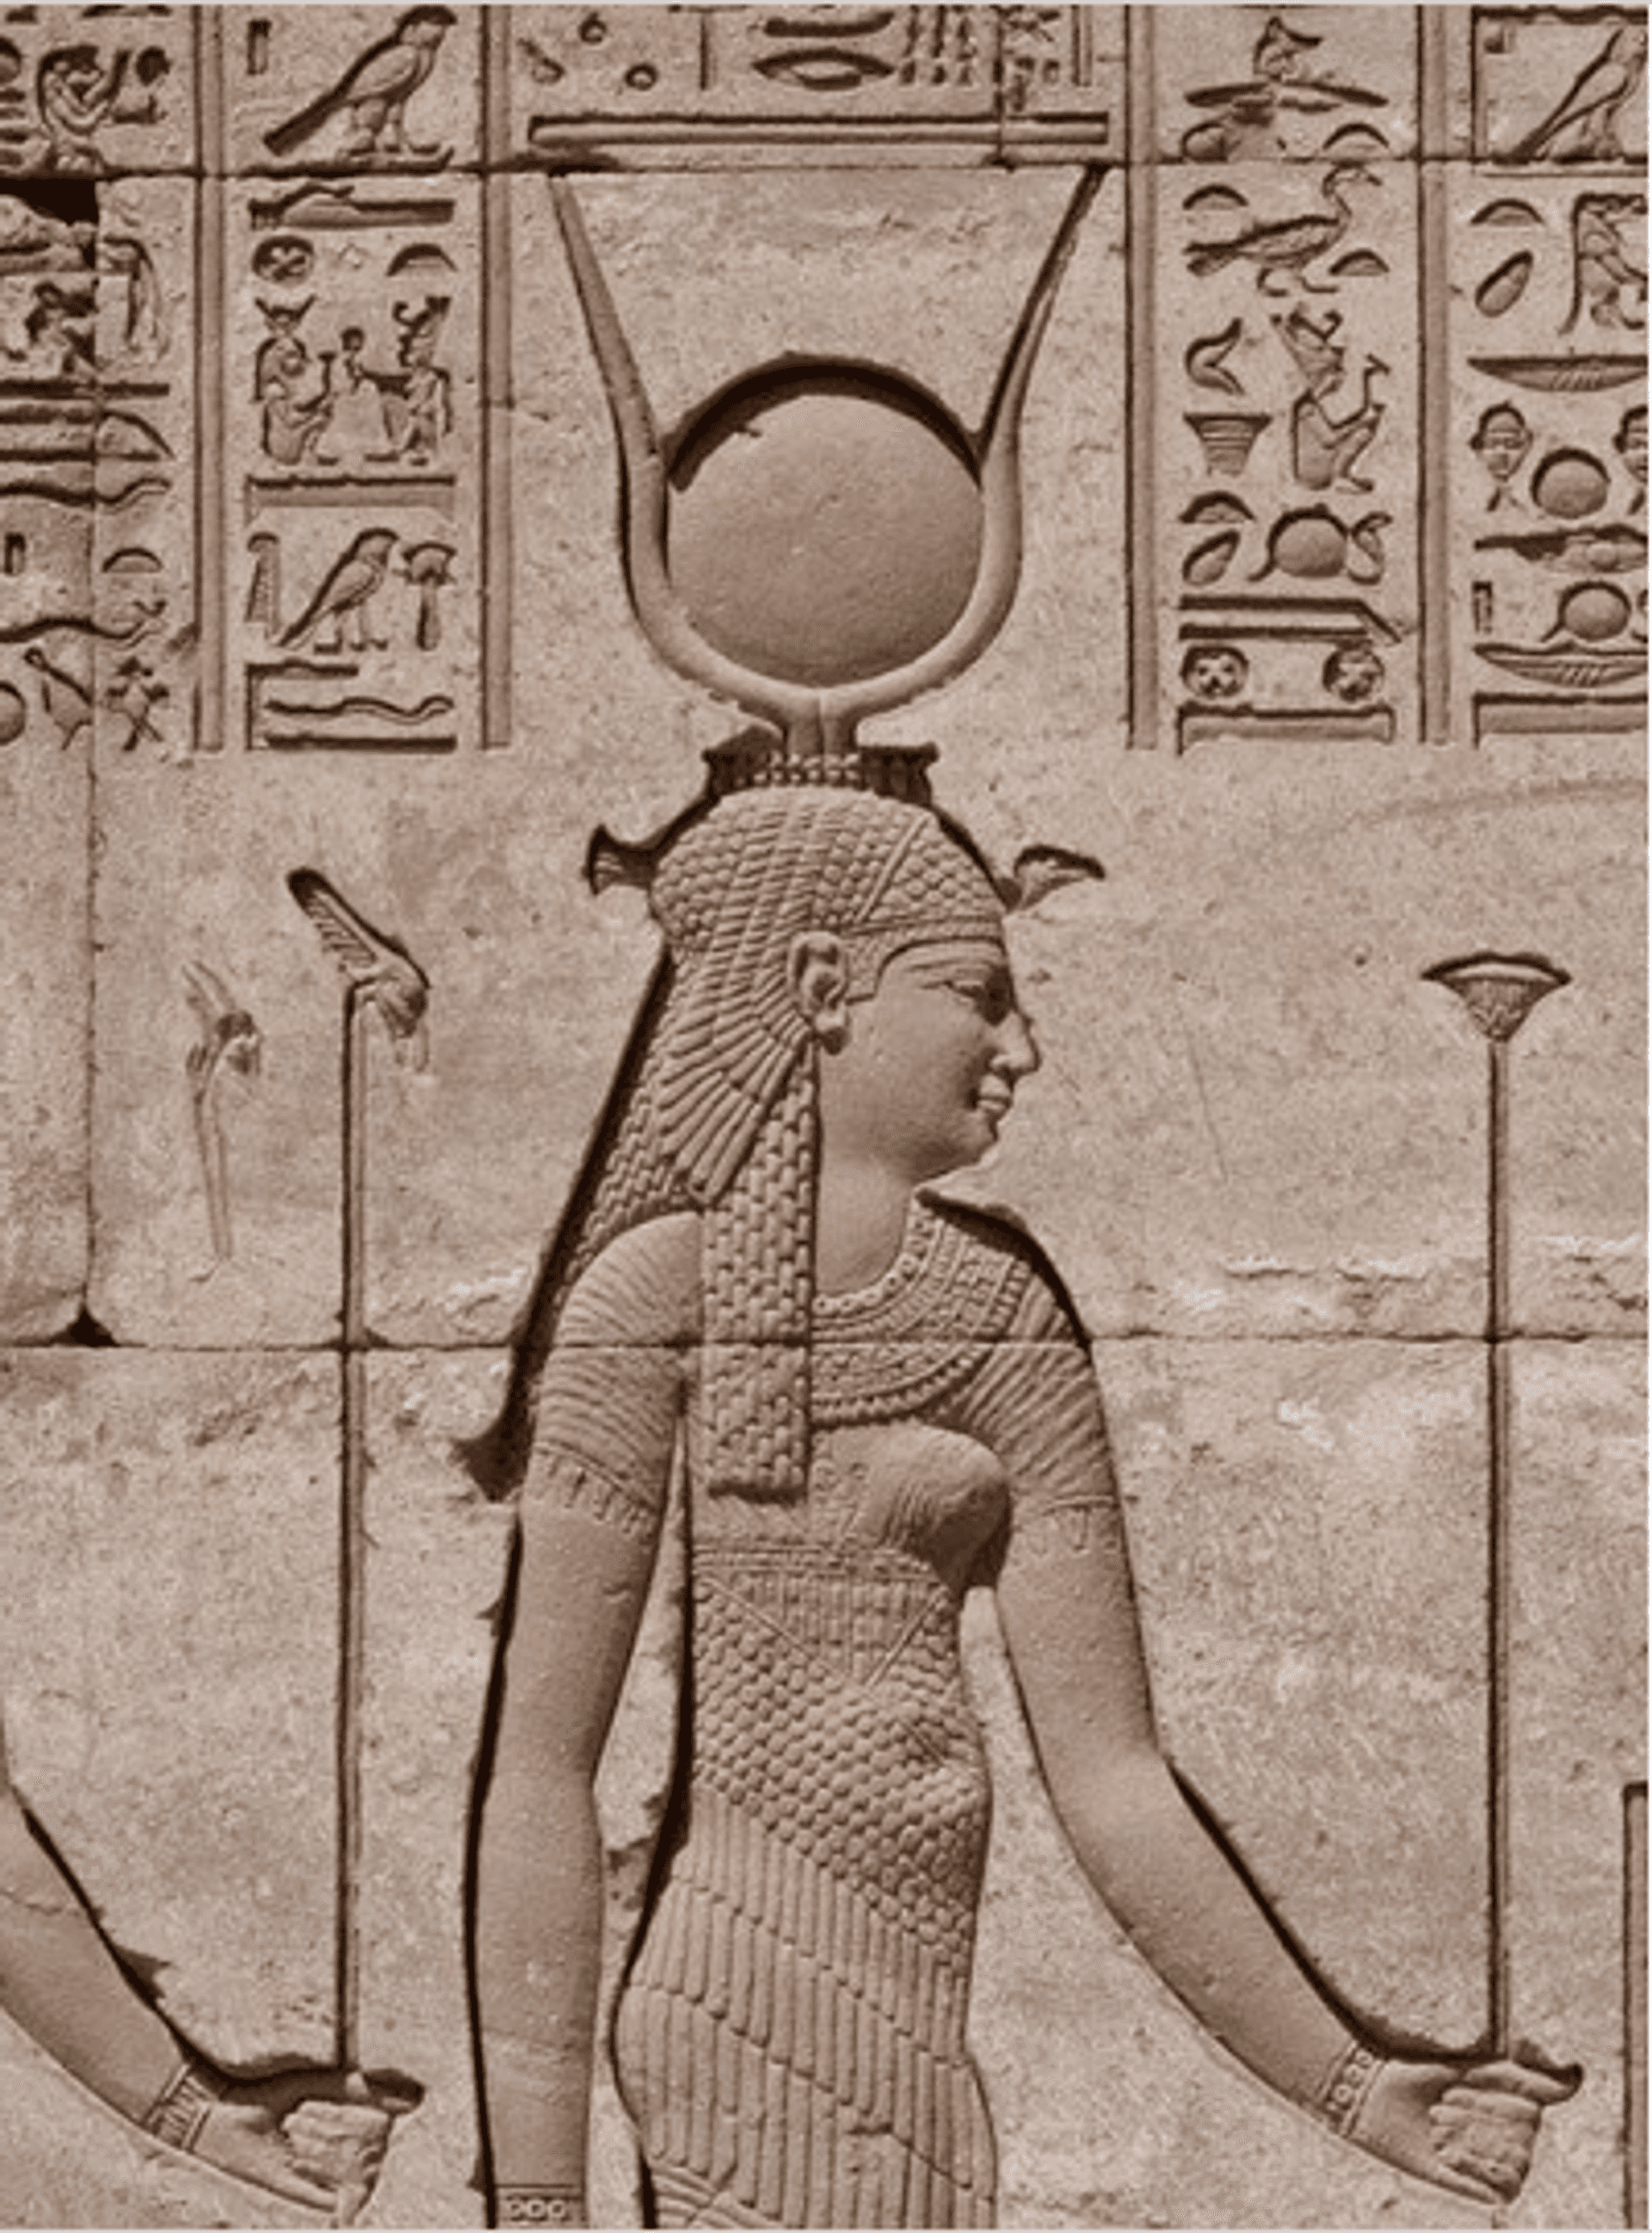 An image of the Egyptian Goddess Ahathoor